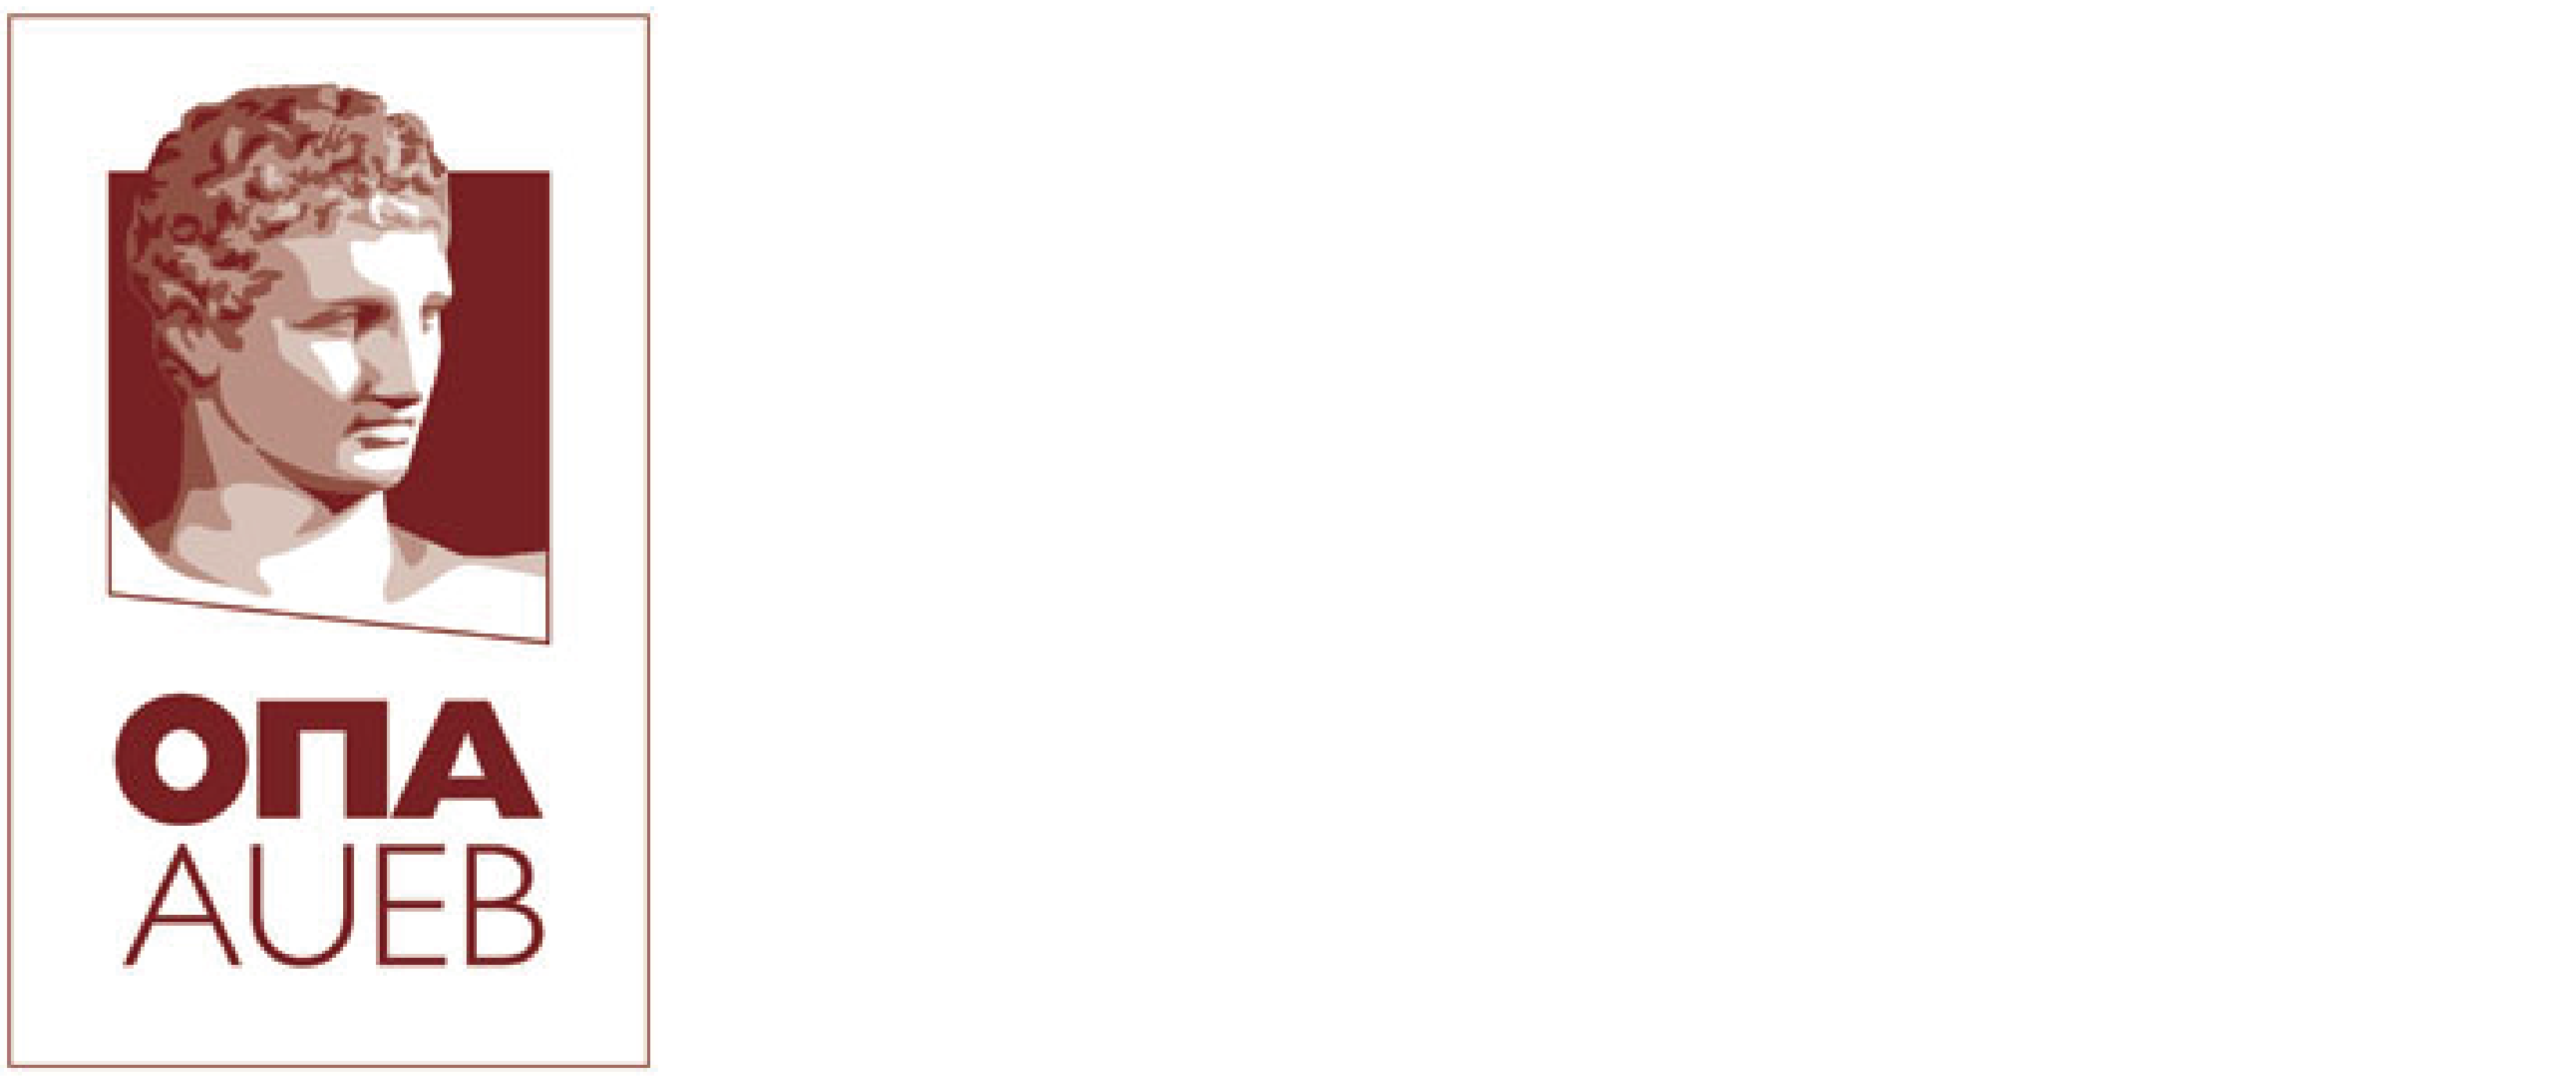 CriMa | Crisis Management - Athens University of Economics and Business